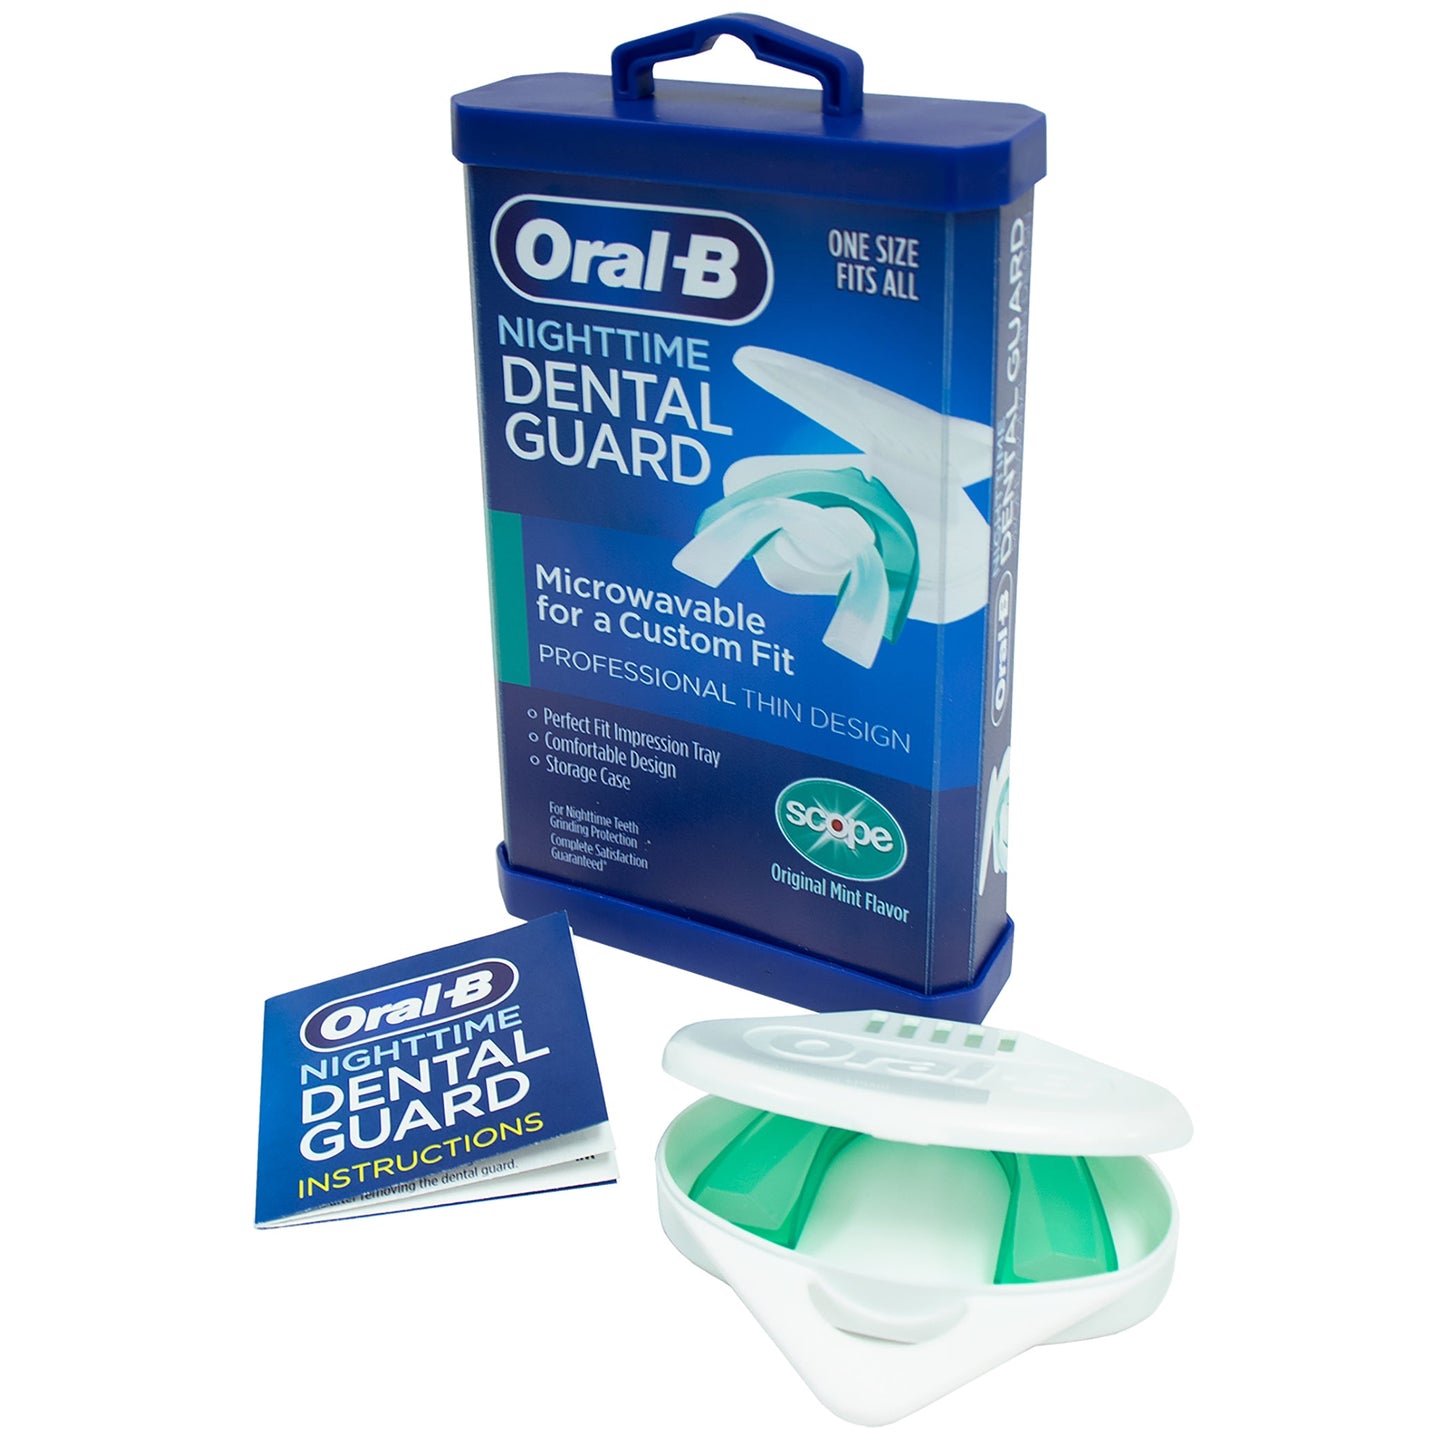 Oral-B Plus Scope Nighttime Dental Guard